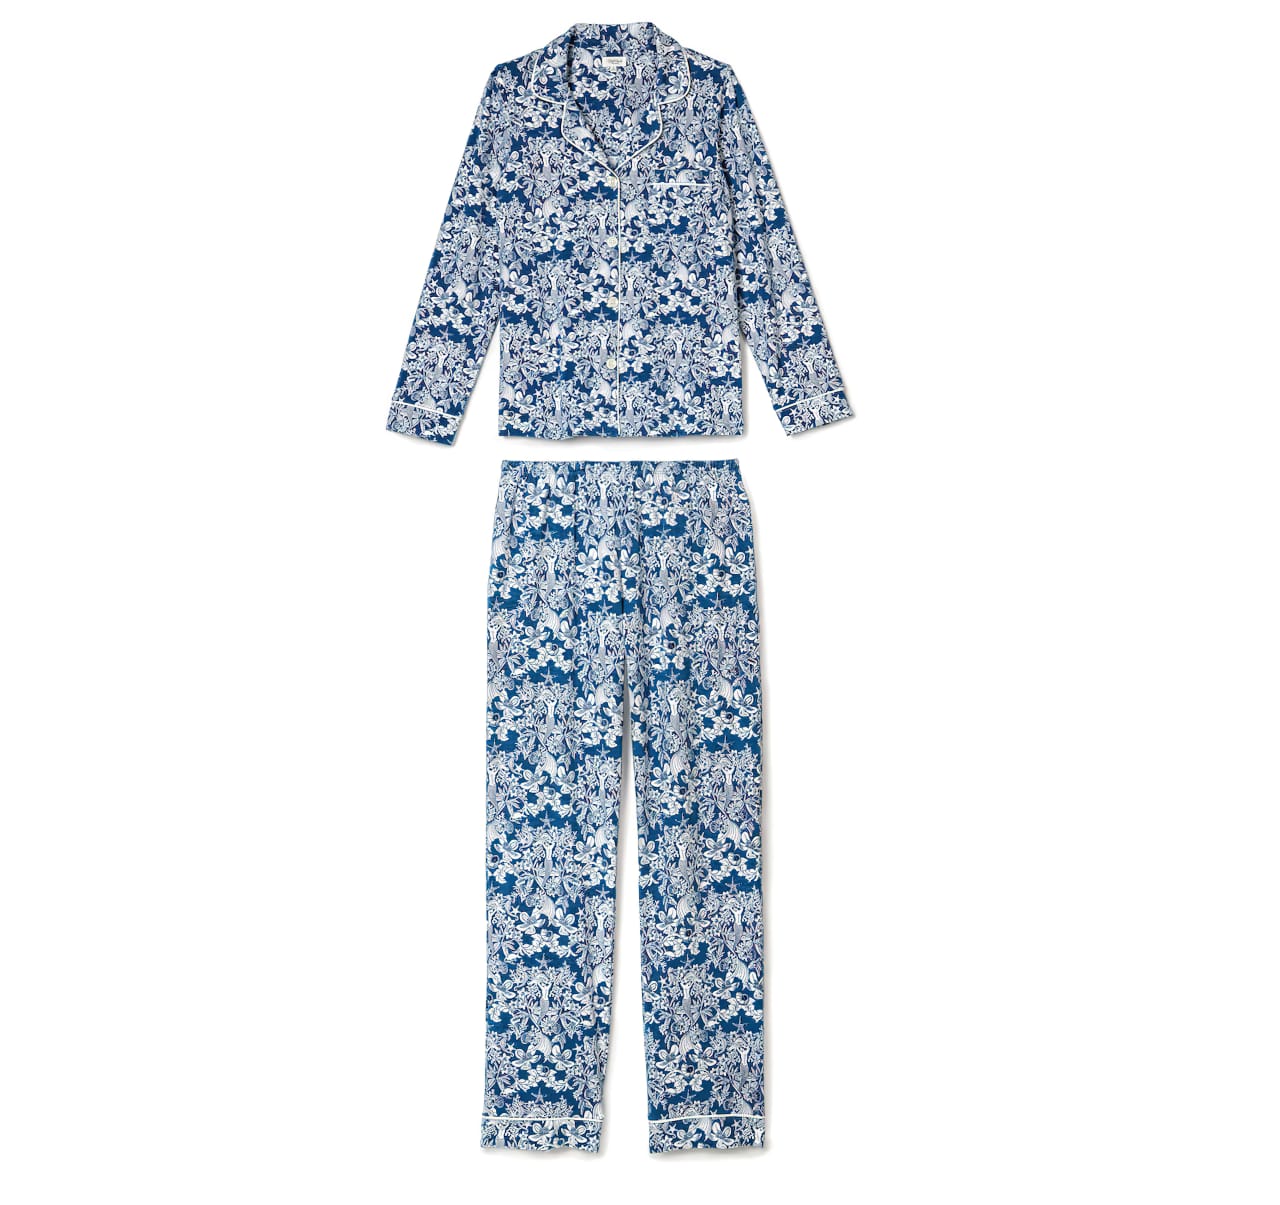 BLVB Women's Pajamas Sets Warm Winter Plush Soft V Neck Long Sleeve Tops  and Pants 2 Piece Outfits Fuzzy Sleepwear